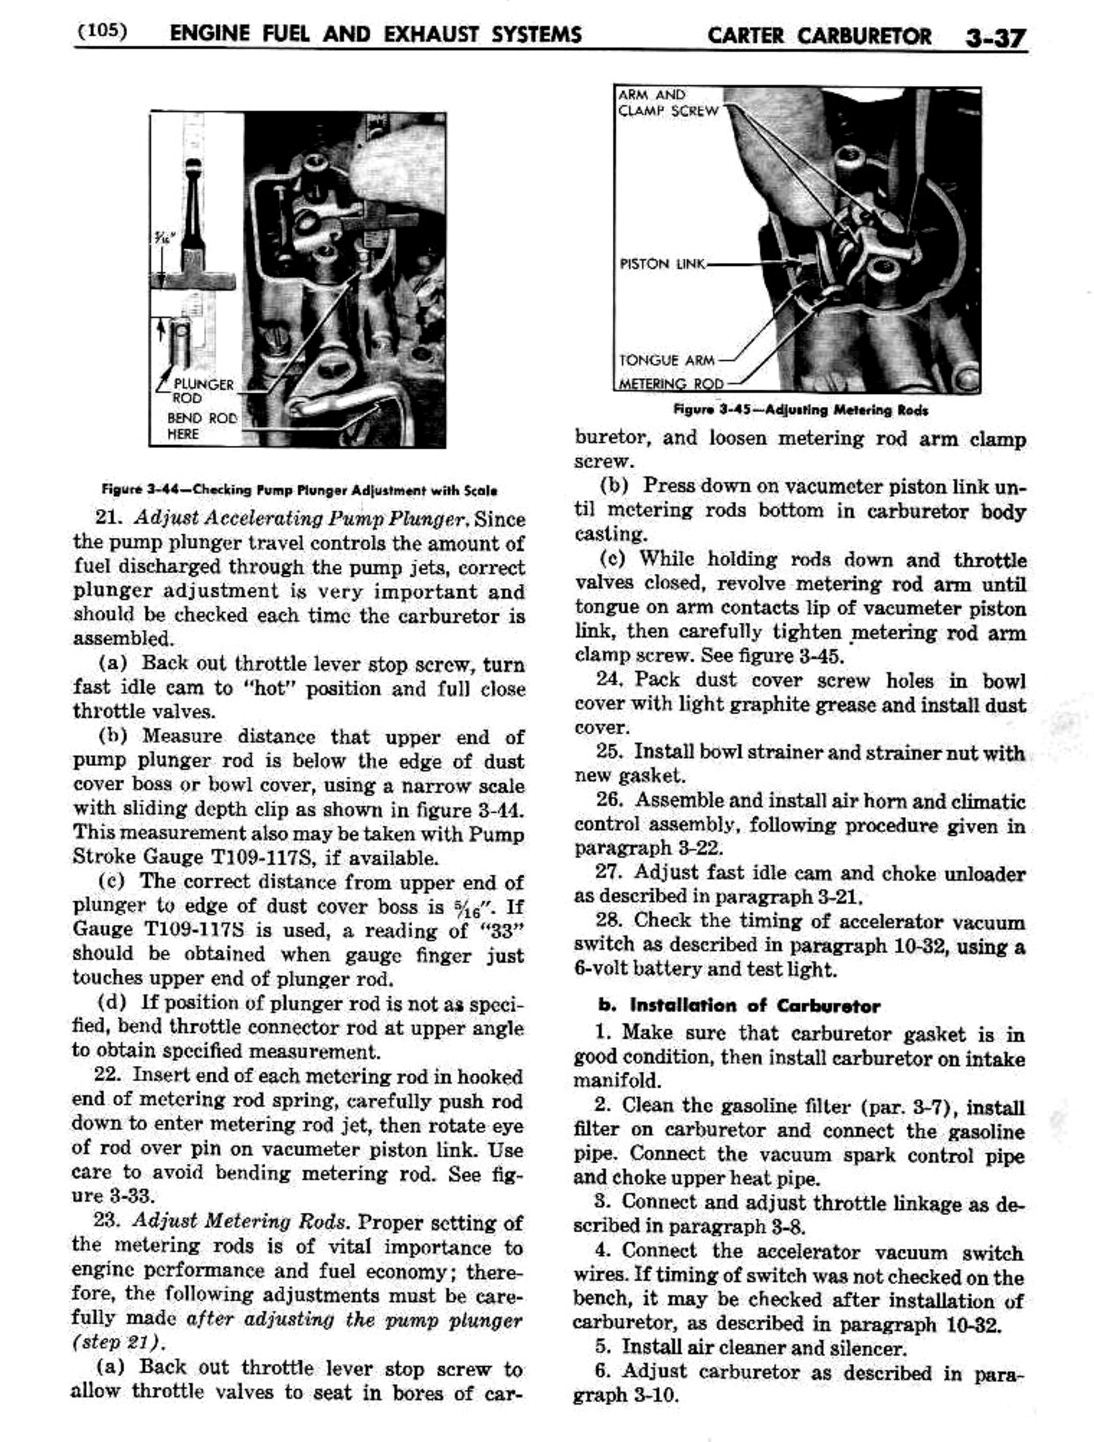 n_04 1951 Buick Shop Manual - Engine Fuel & Exhaust-037-037.jpg